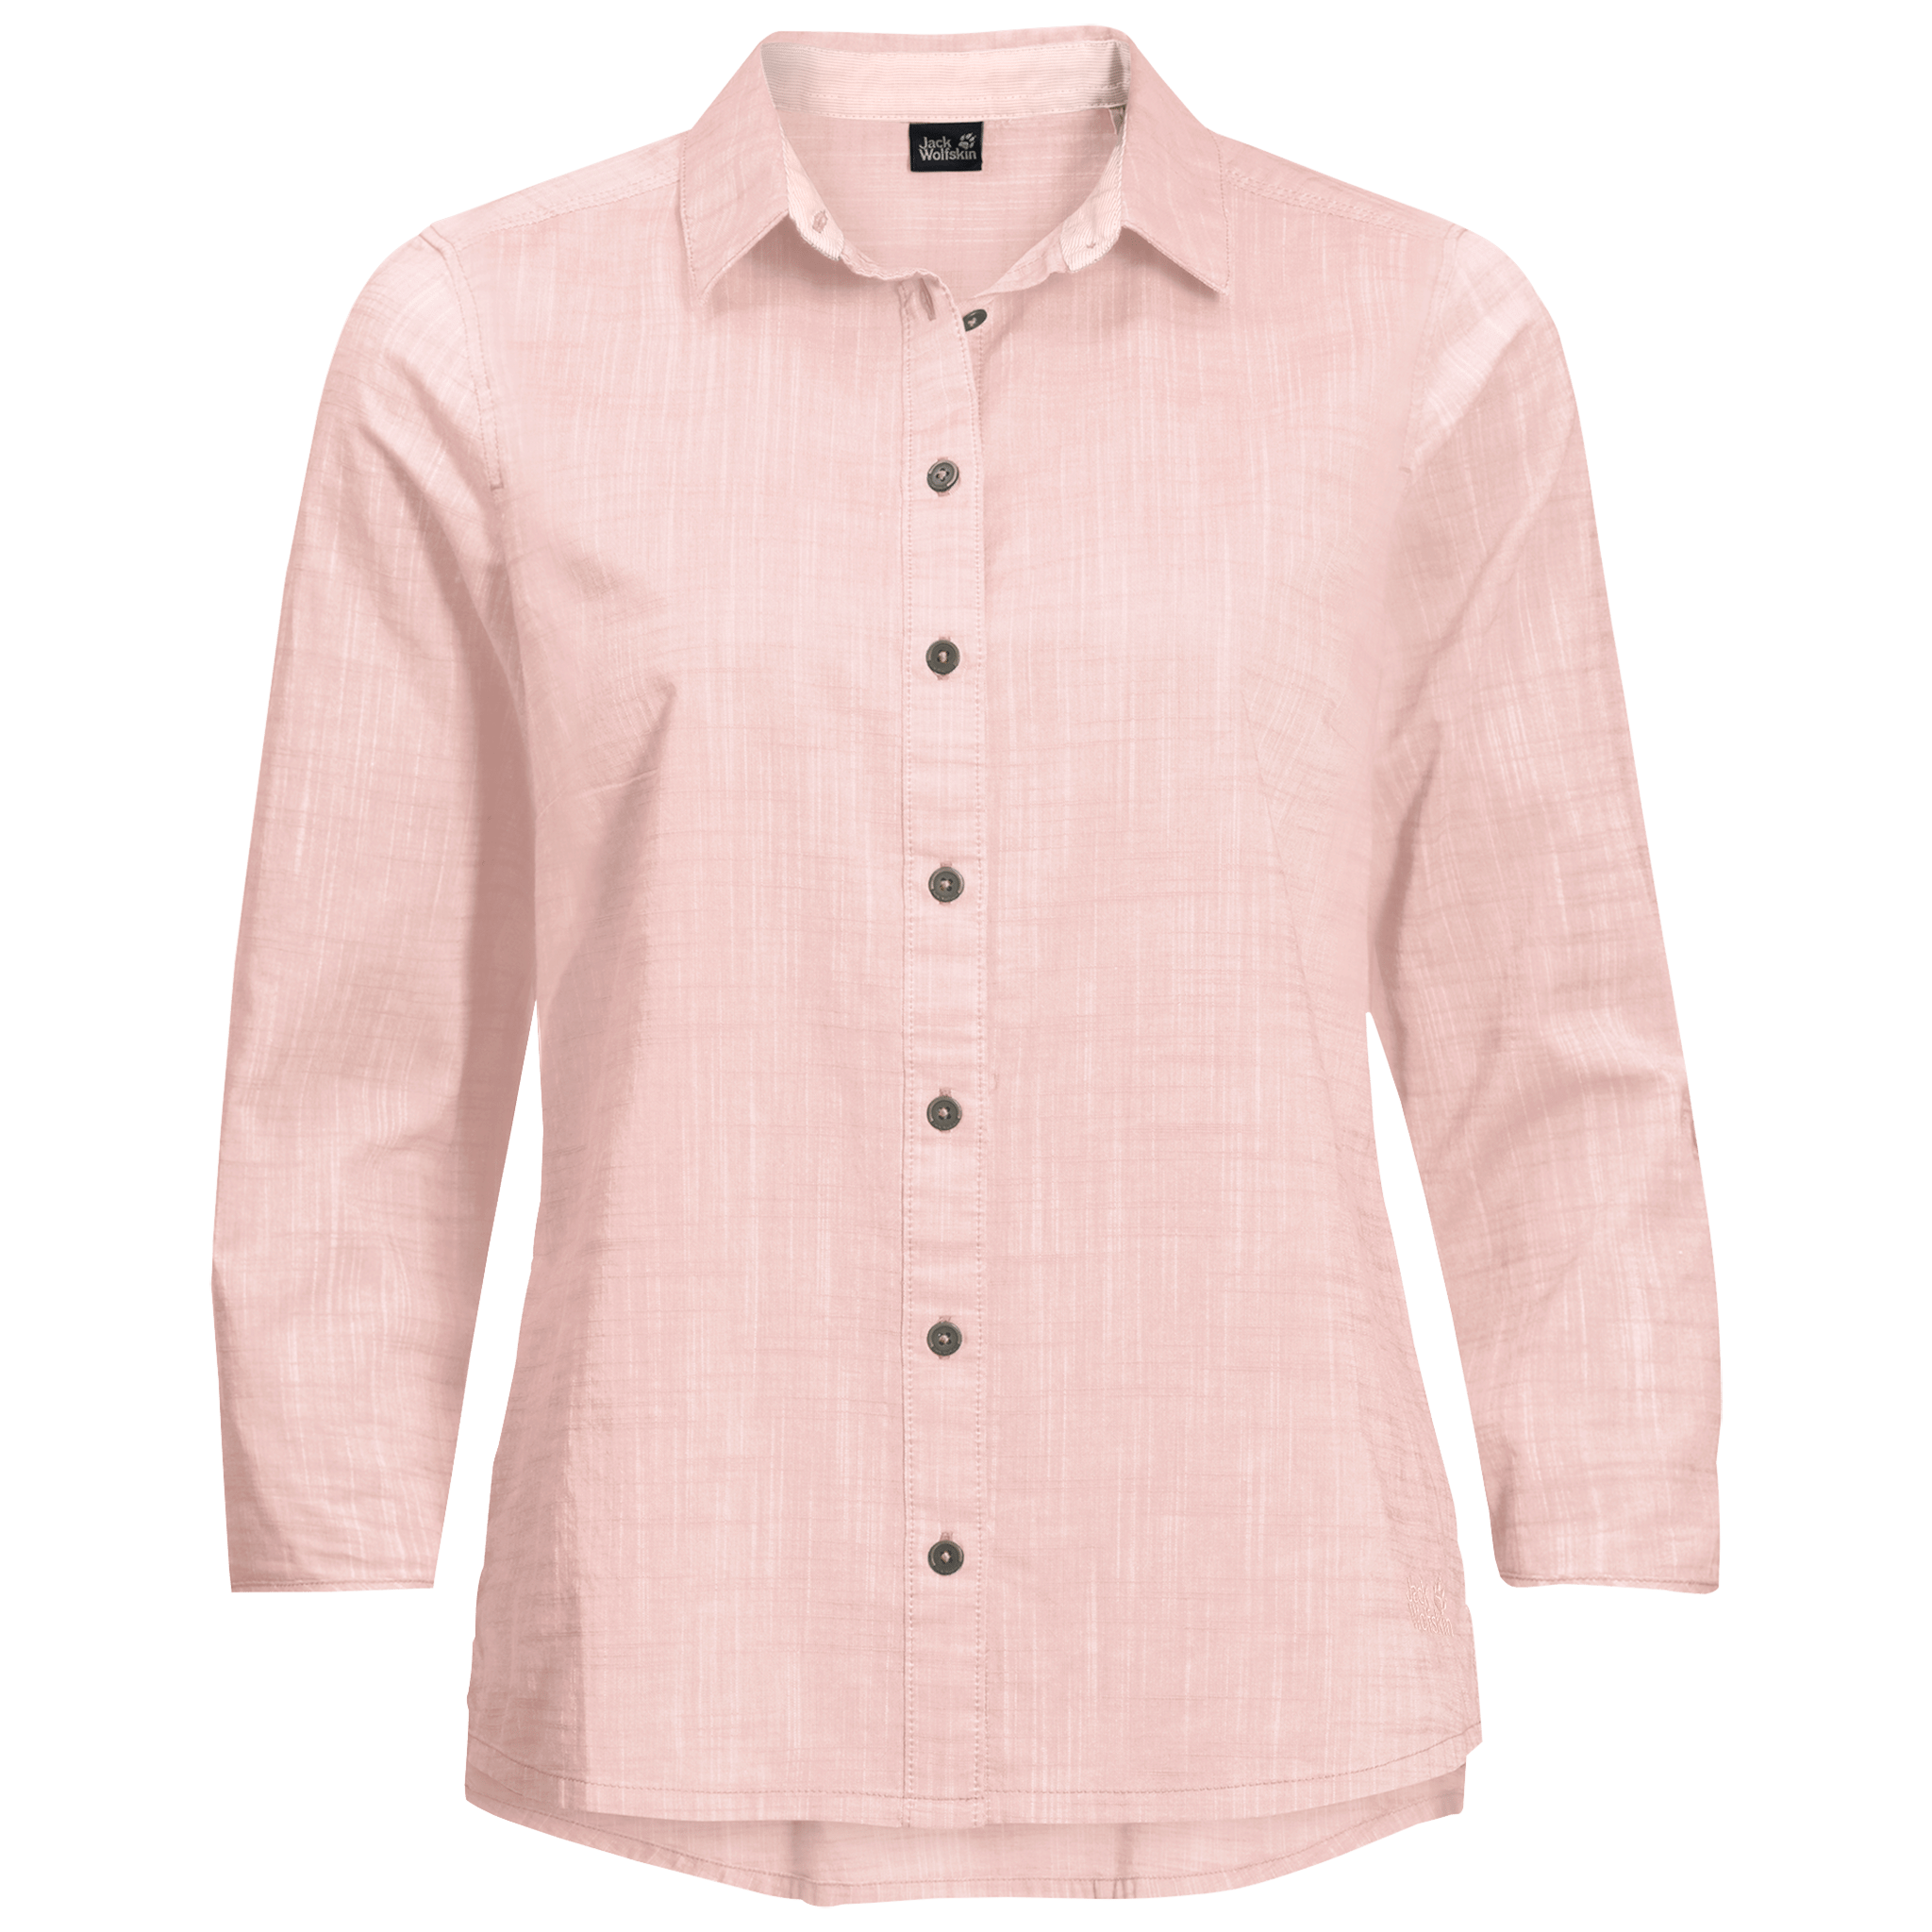 Blush Pink Long-Sleeved Organic Cotton Buttondown